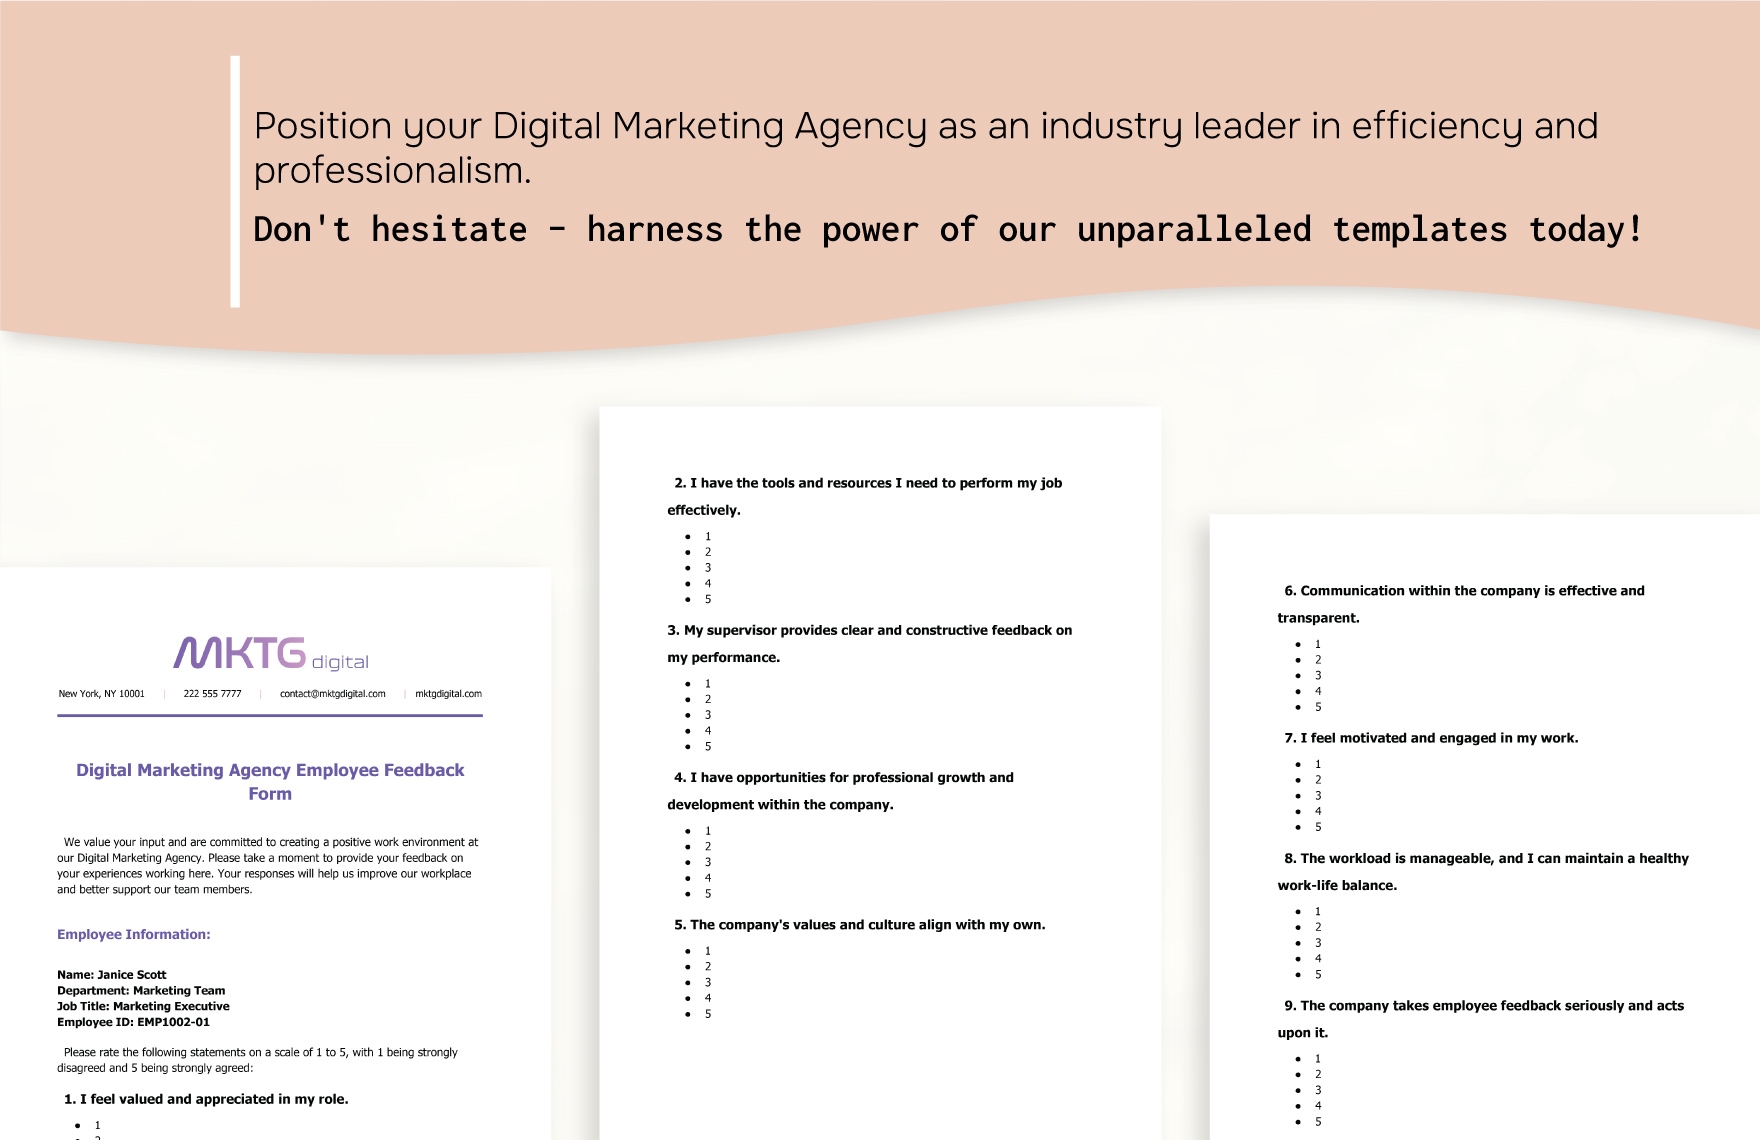 Digital Marketing Agency Employee Feedback Form Template